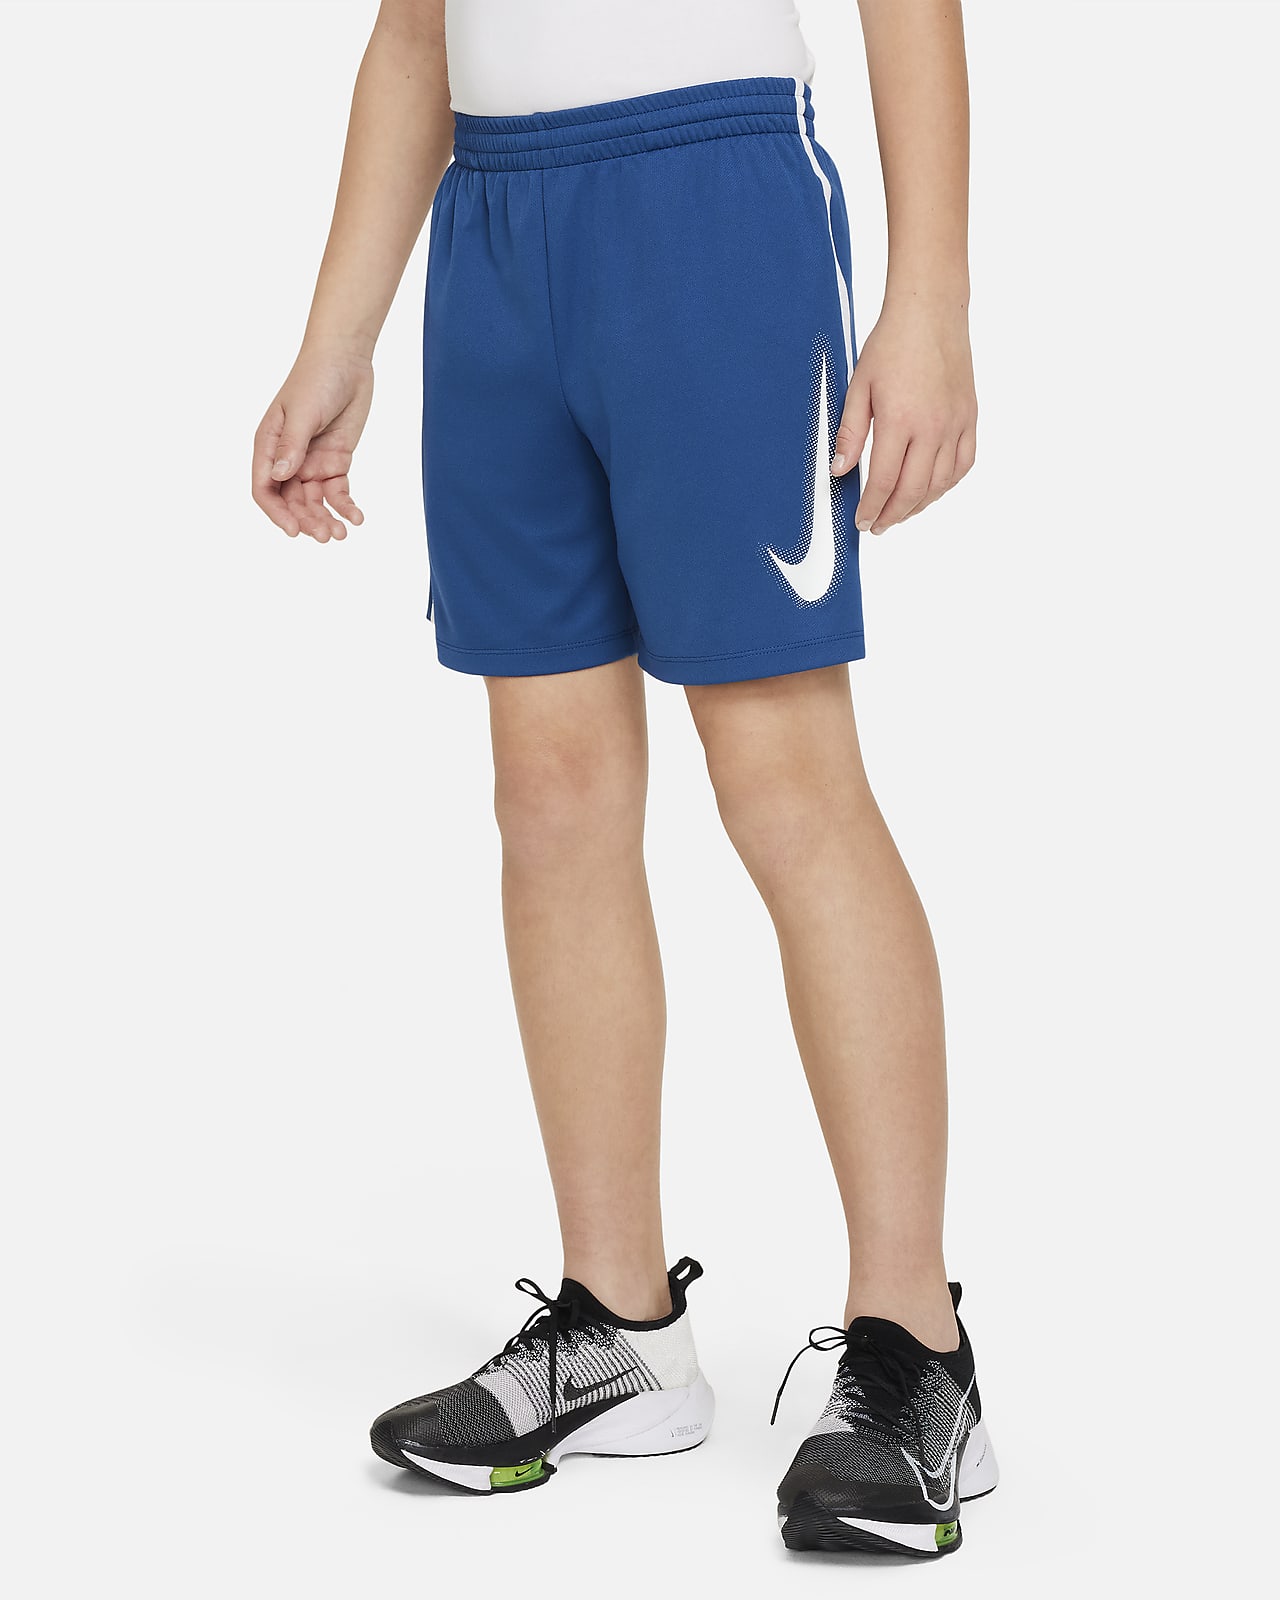 Nike Multi Dri-FIT Trainingsshorts mit Grafik für ältere Kinder (Jungen)